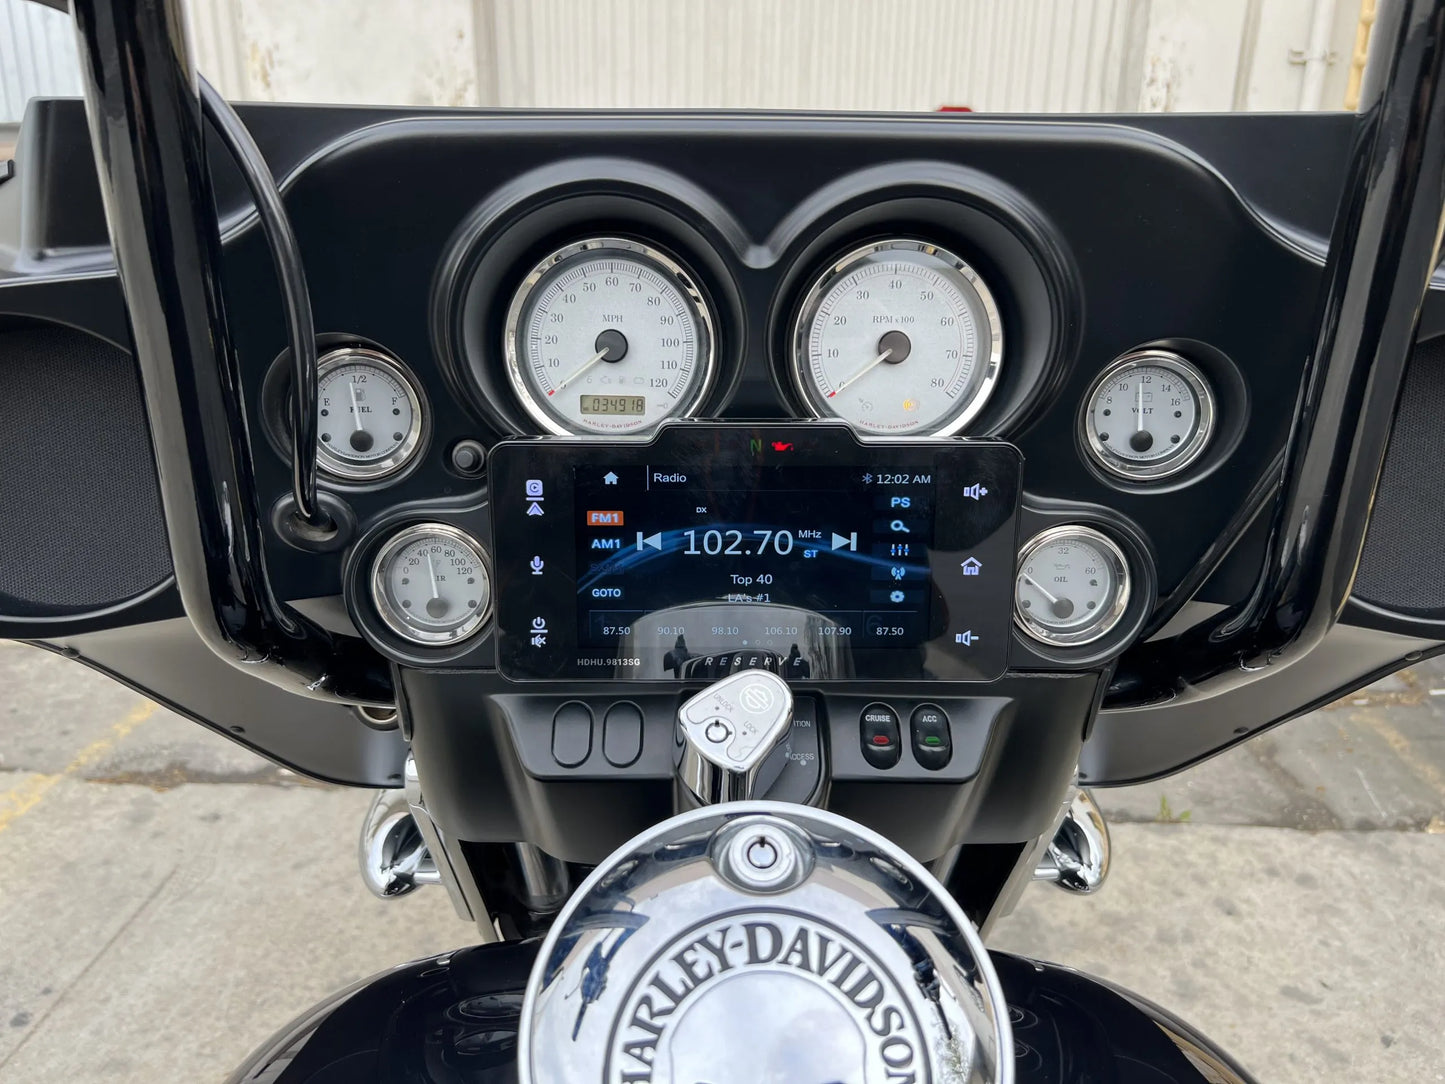 PRE-ORDER — SoundStream HDHU.9813SG Plug & Play Upgrade Headunit For 1998-2013 Harley Davidson® Street Glide, Electra Glide, Ultra Only